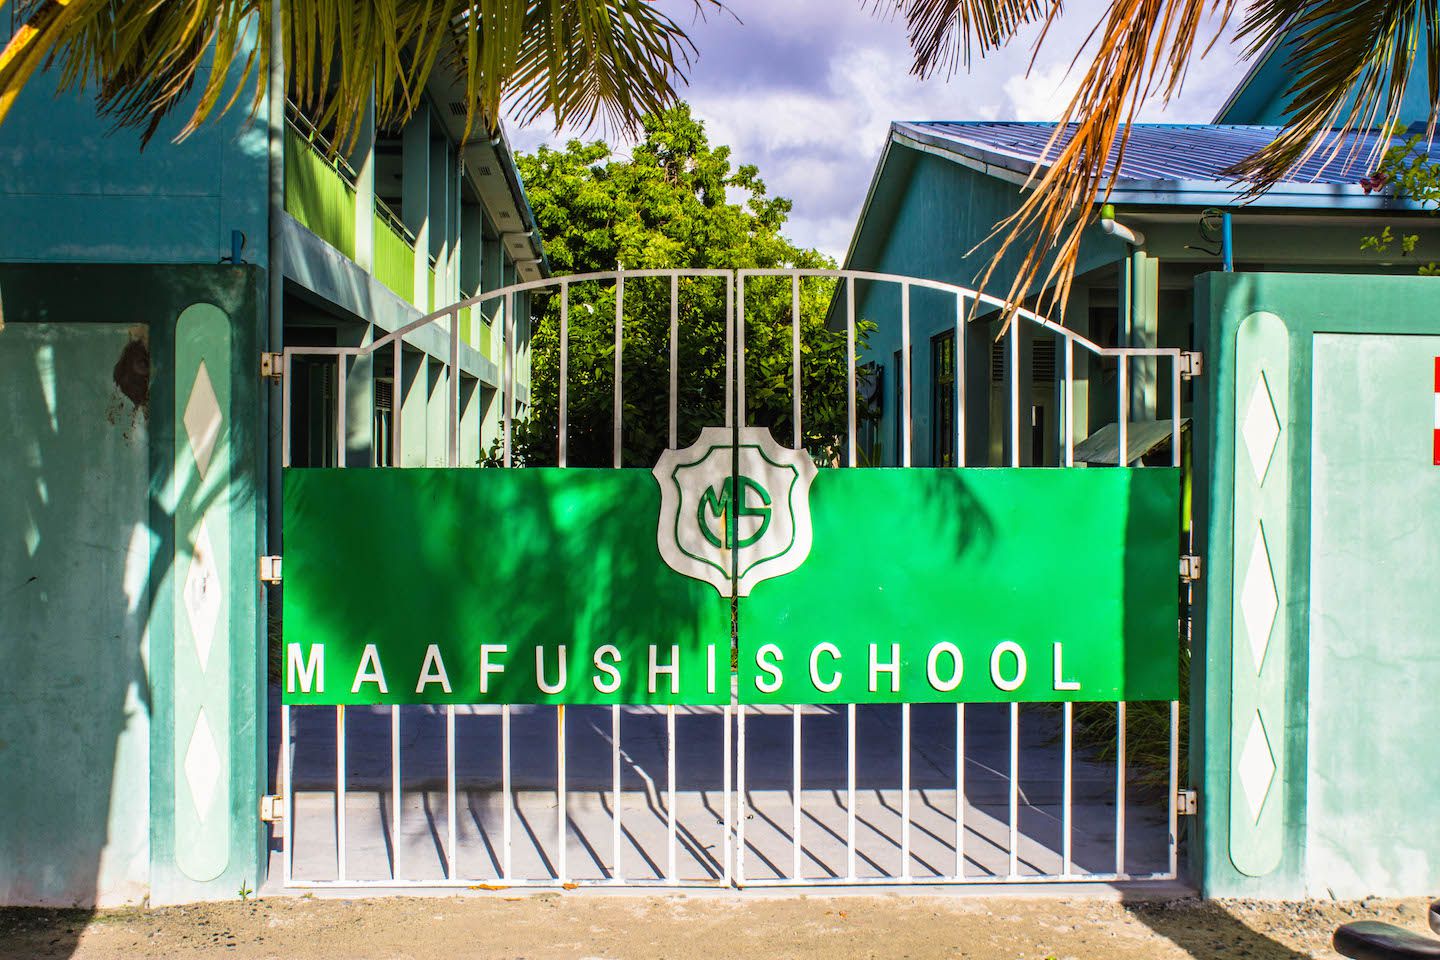 Maafushi School, Maafushi, Maldives